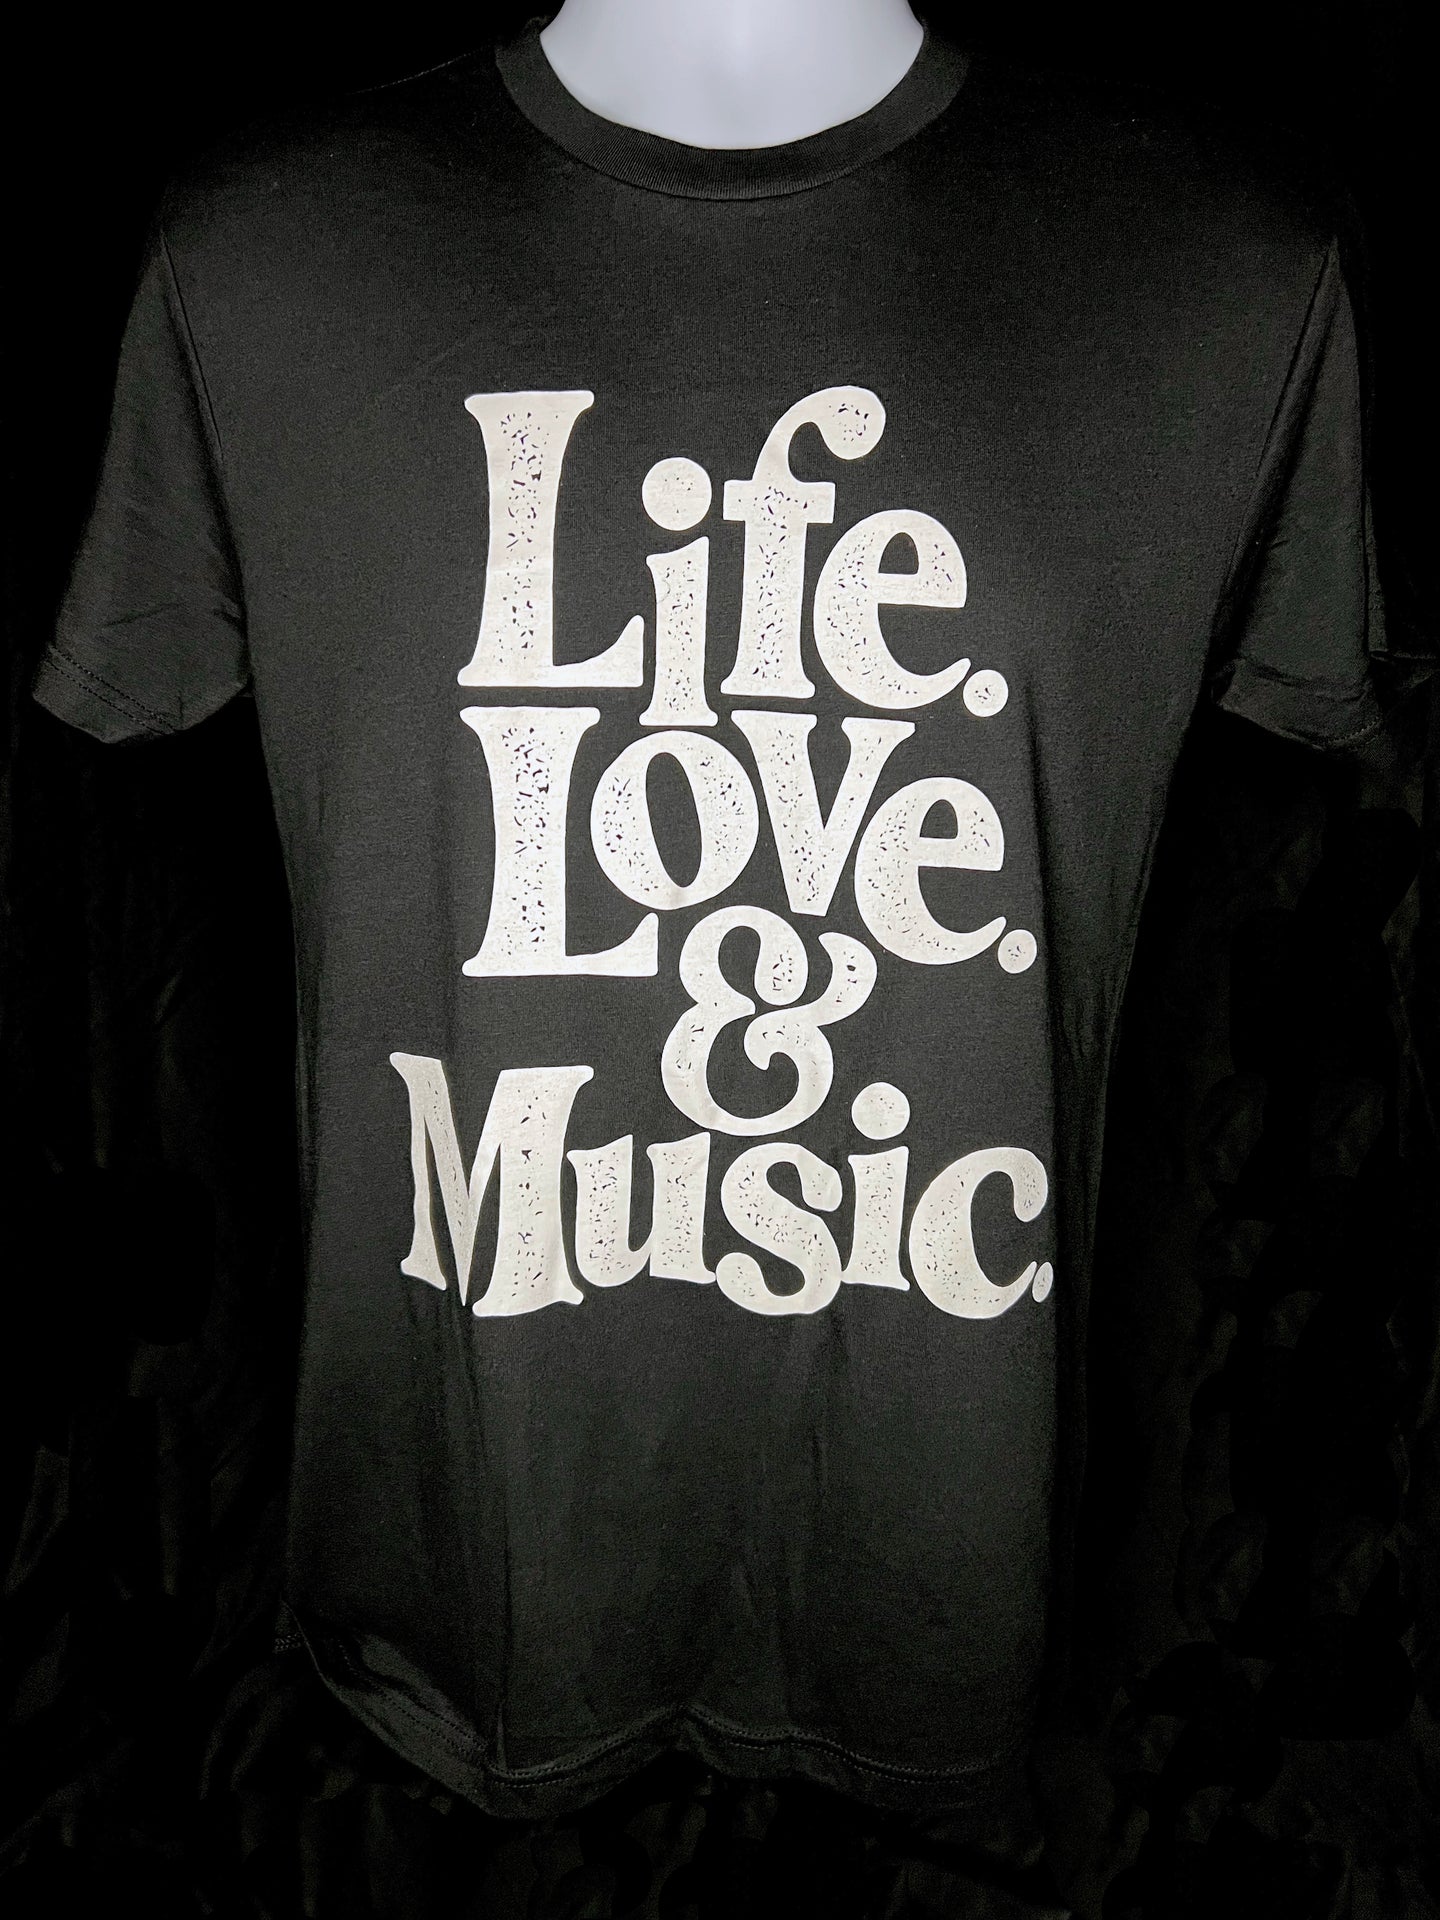 Life. Love. & Music. - Black T-Shirt (Unisex)